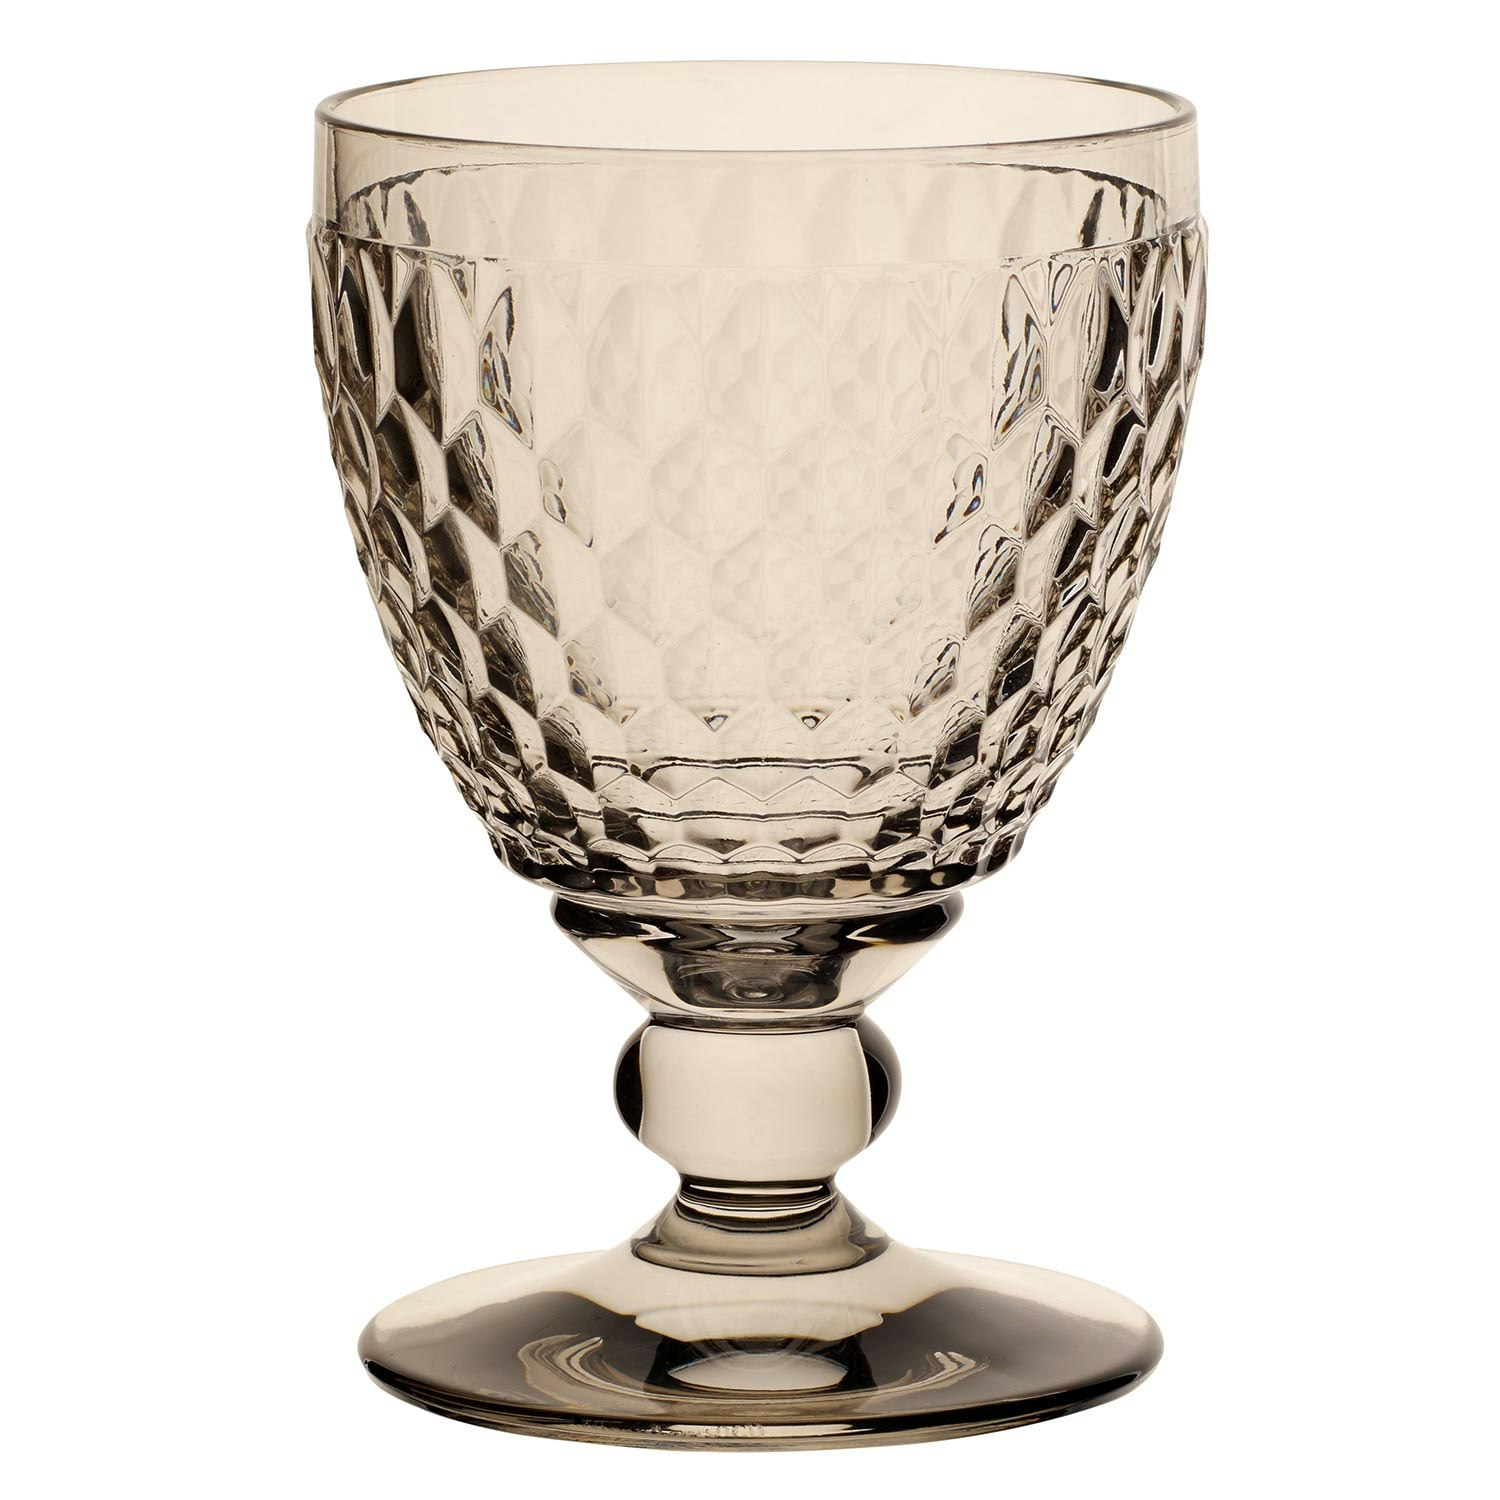 https://royaldesign.com/image/2/villeroy-boch-boston-coloured-water-goblet-6